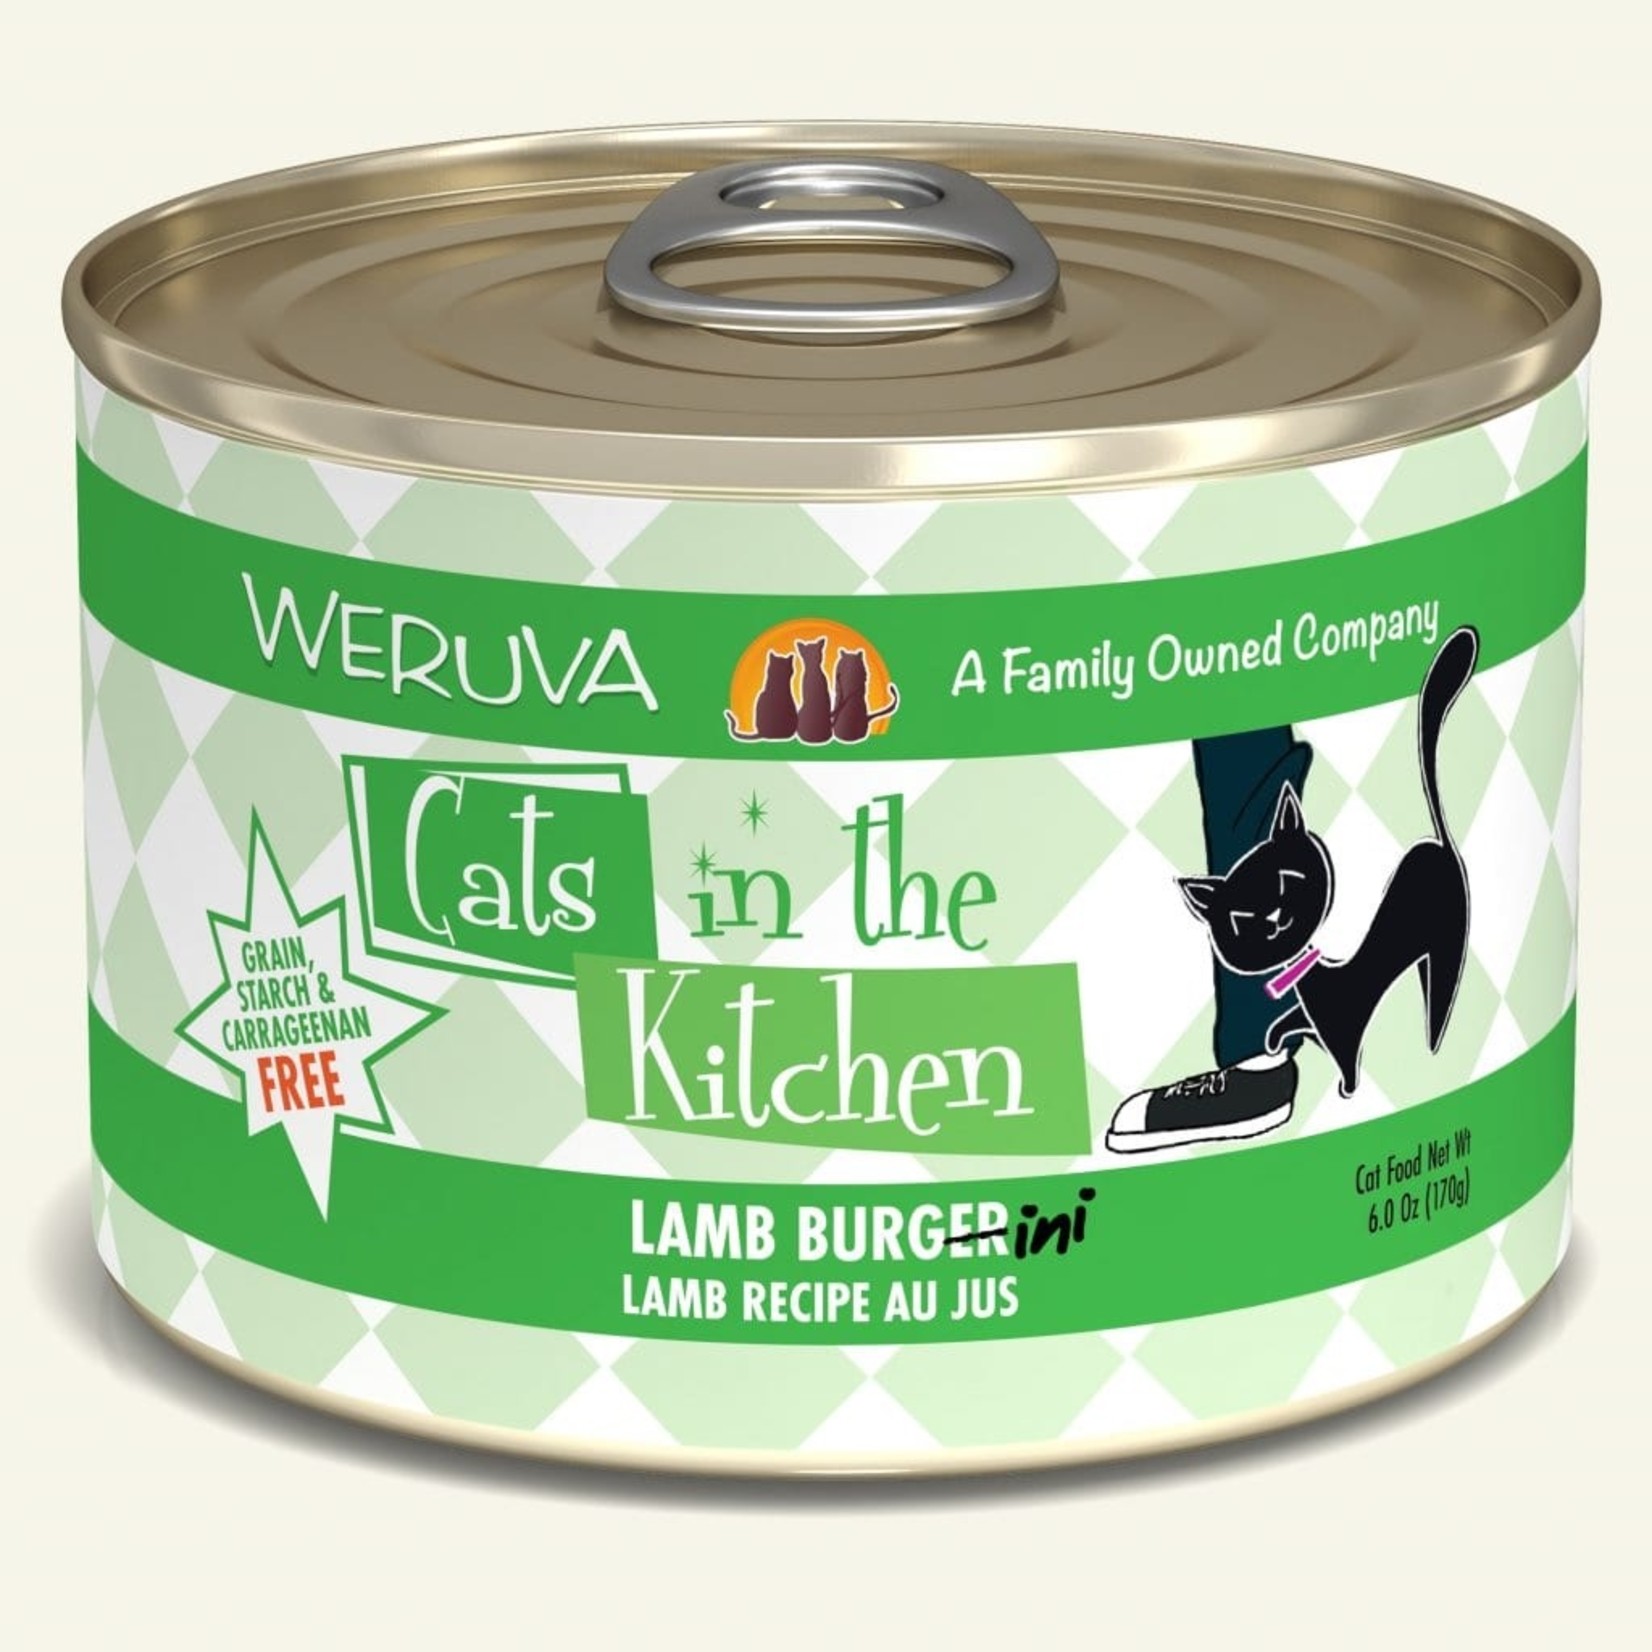 Weruva Weruva Cats in the Kitchen Wet Cat Food Lamb Burger-ini Lamb Recipe Au Jus 6oz Can